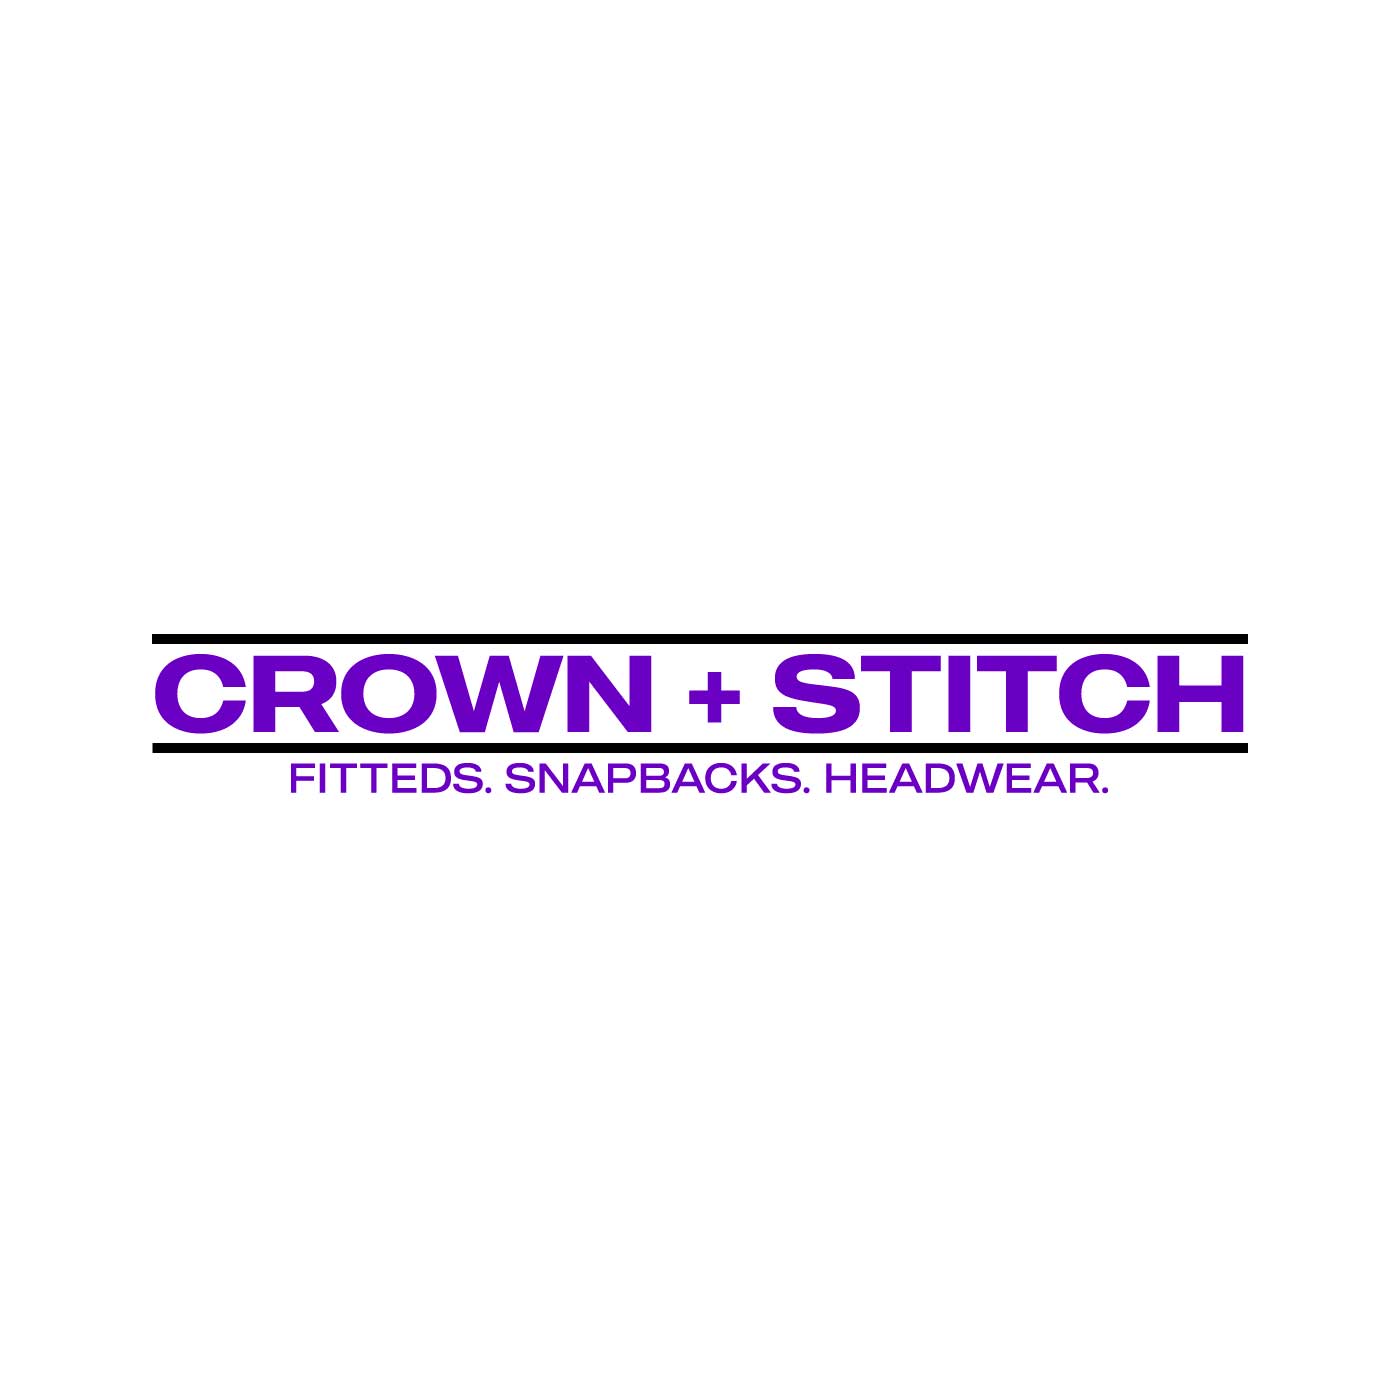 Crown + Stitch - A Show About Hats's artwork